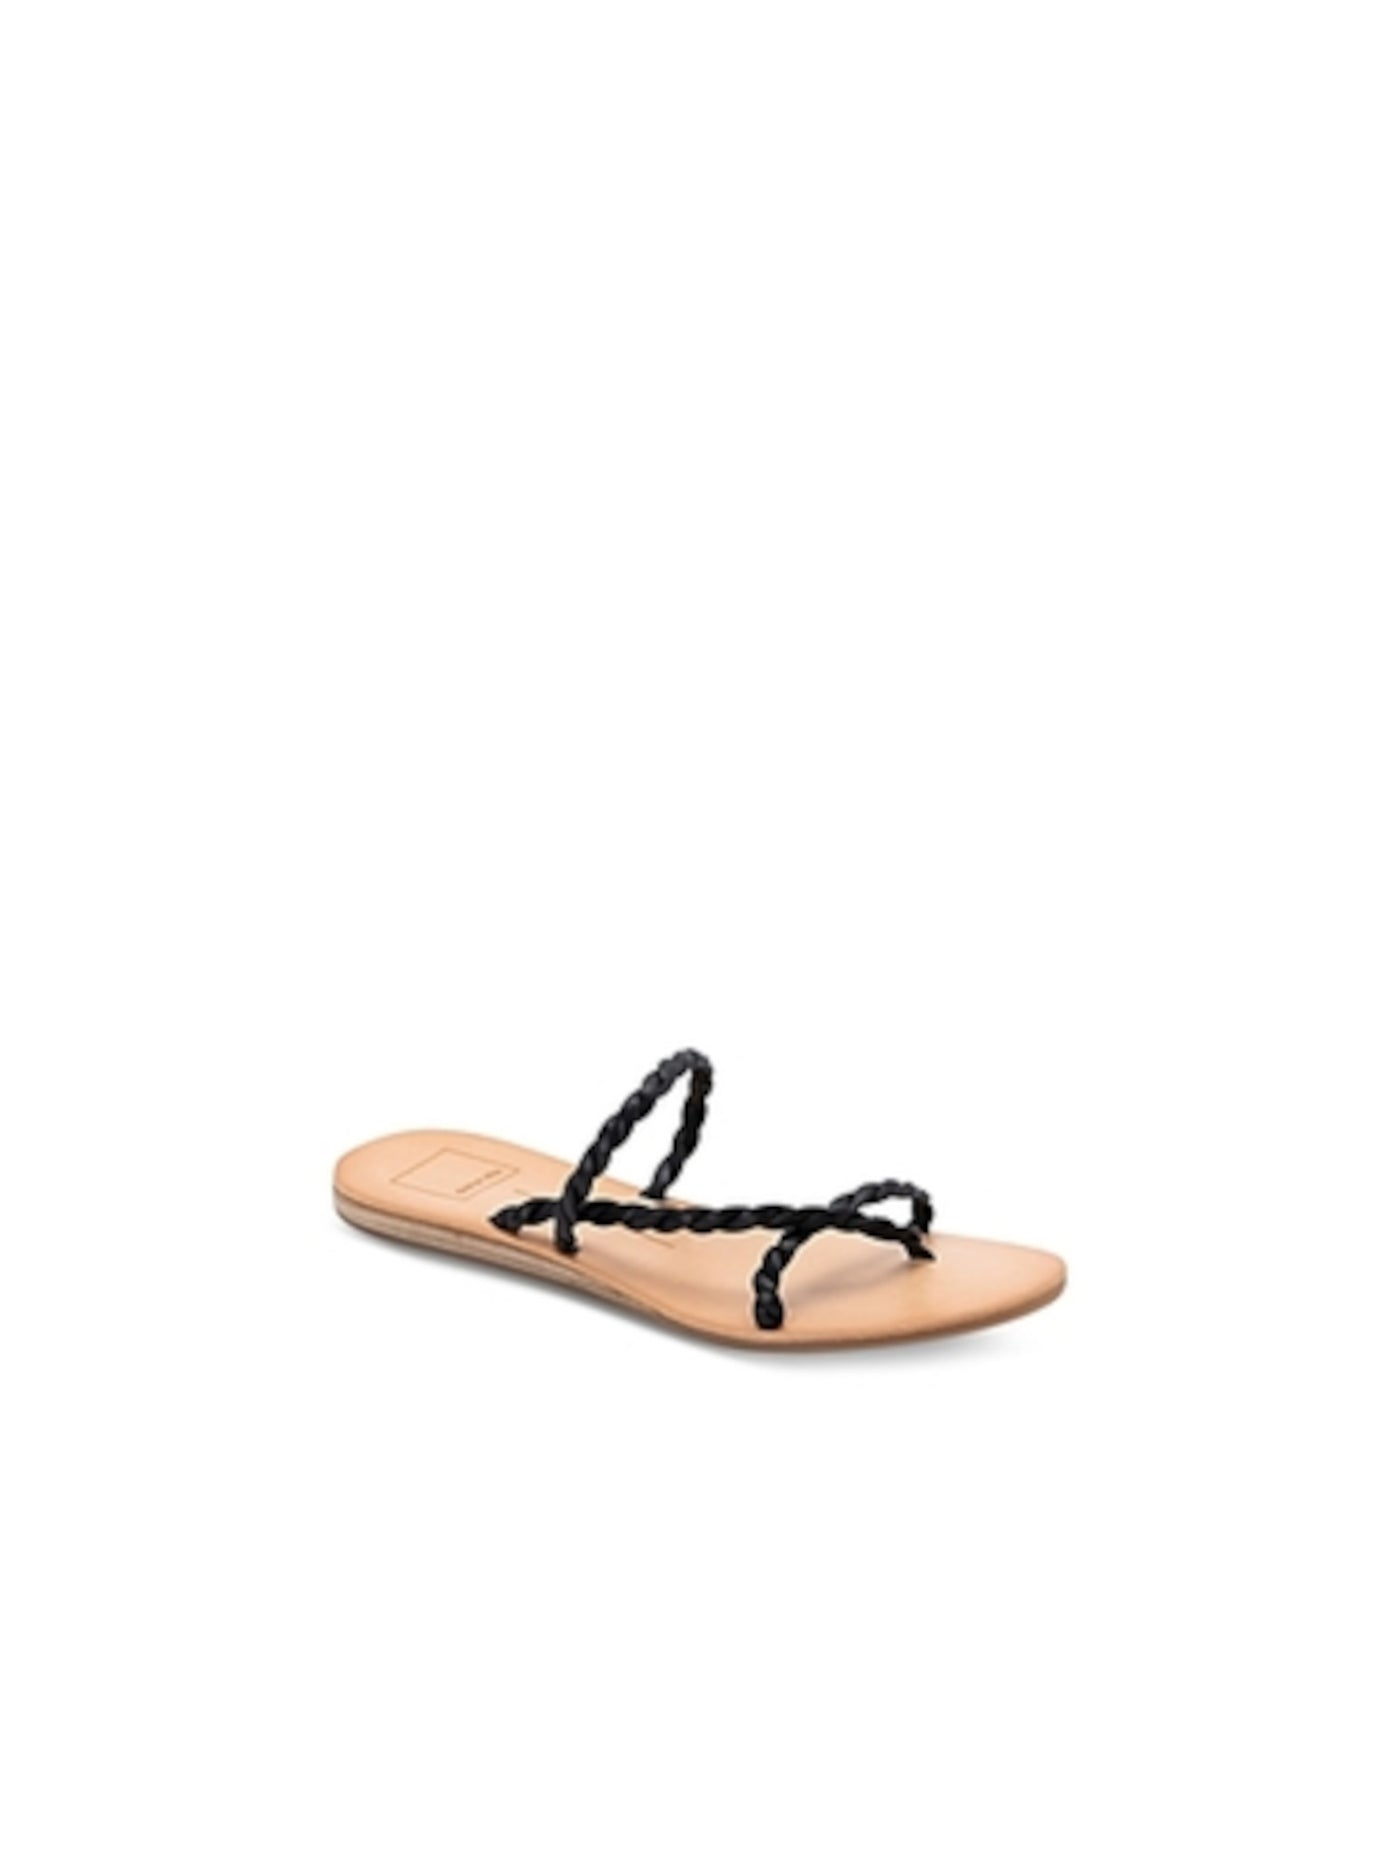 DOLCE VITA Womens Black Braided Dexla Open Toe Sculpted Heel Slip On Thong Sandals 7.5